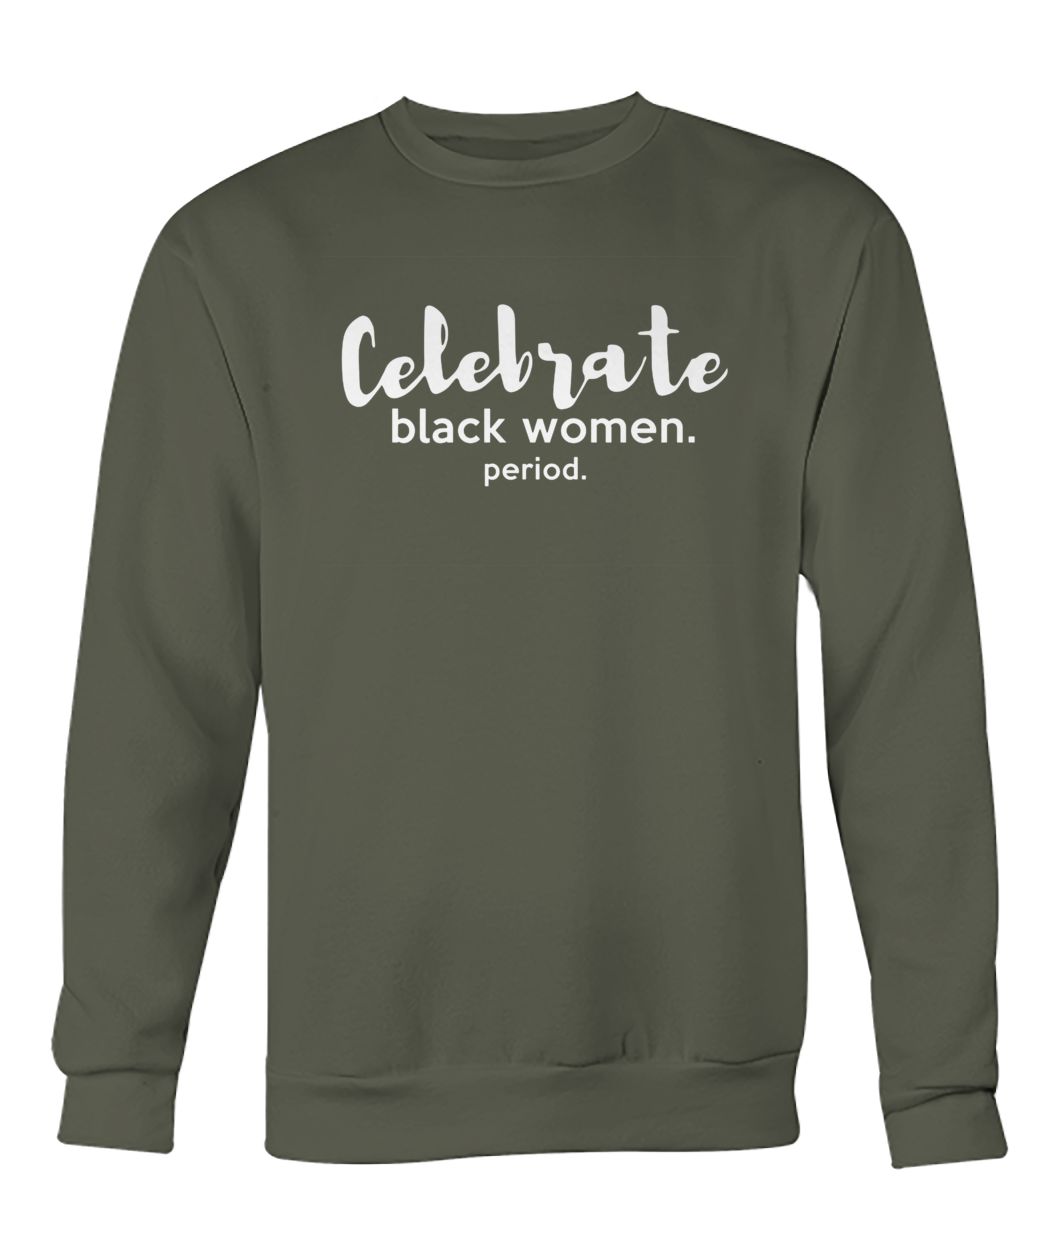 Celebrate black women period crew neck sweatshirt